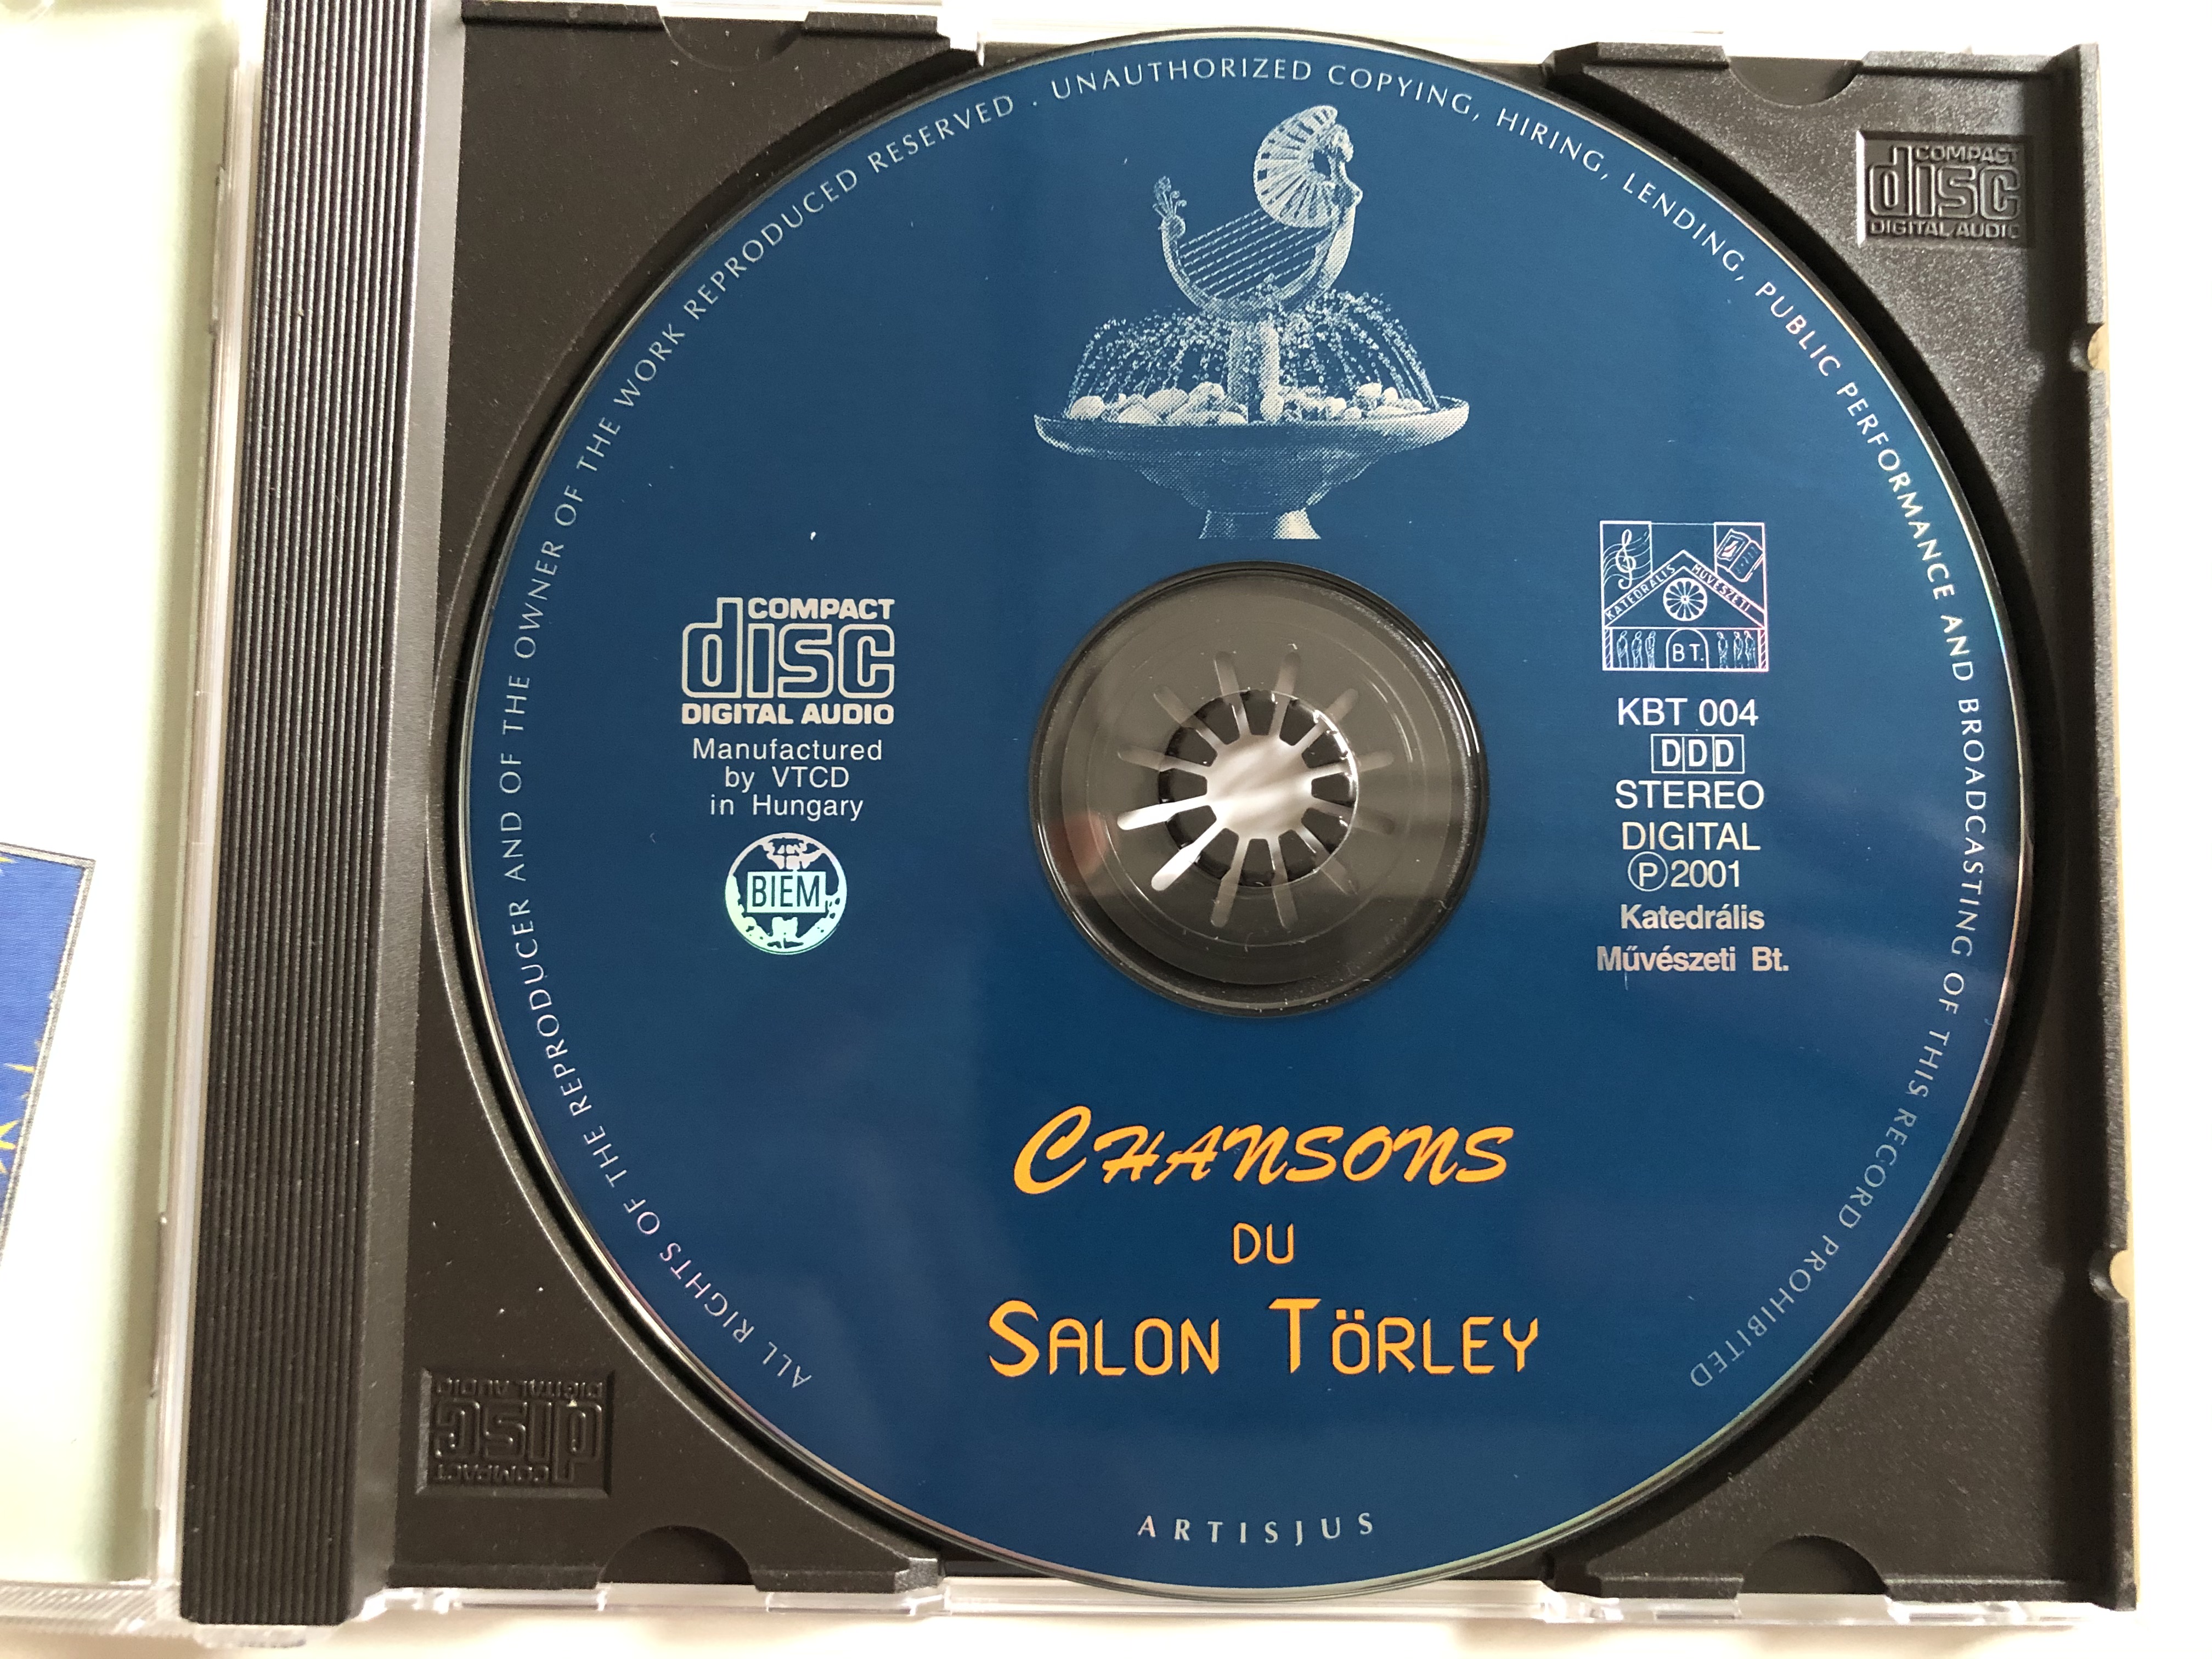 chansons-du-salon-torley-katedralis-muveszeti-bt.-audio-cd-2001-stereo-kbt-004-7-.jpg